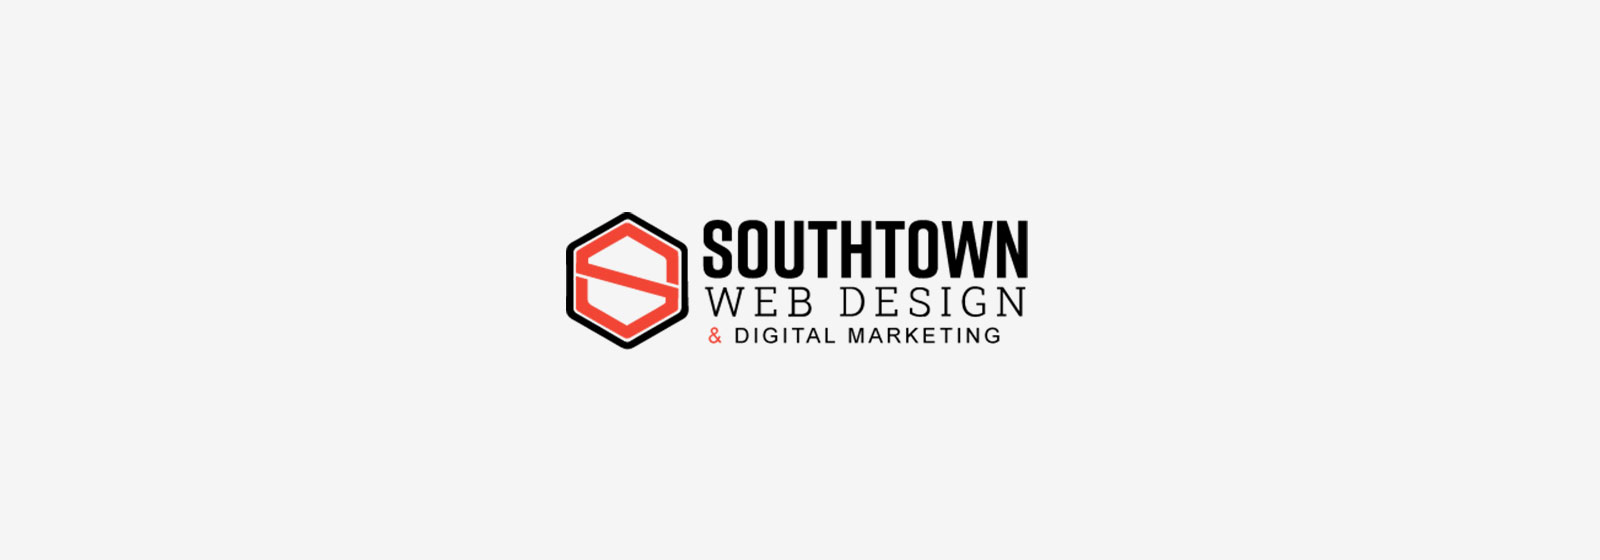 about southtown web design & digital marekting